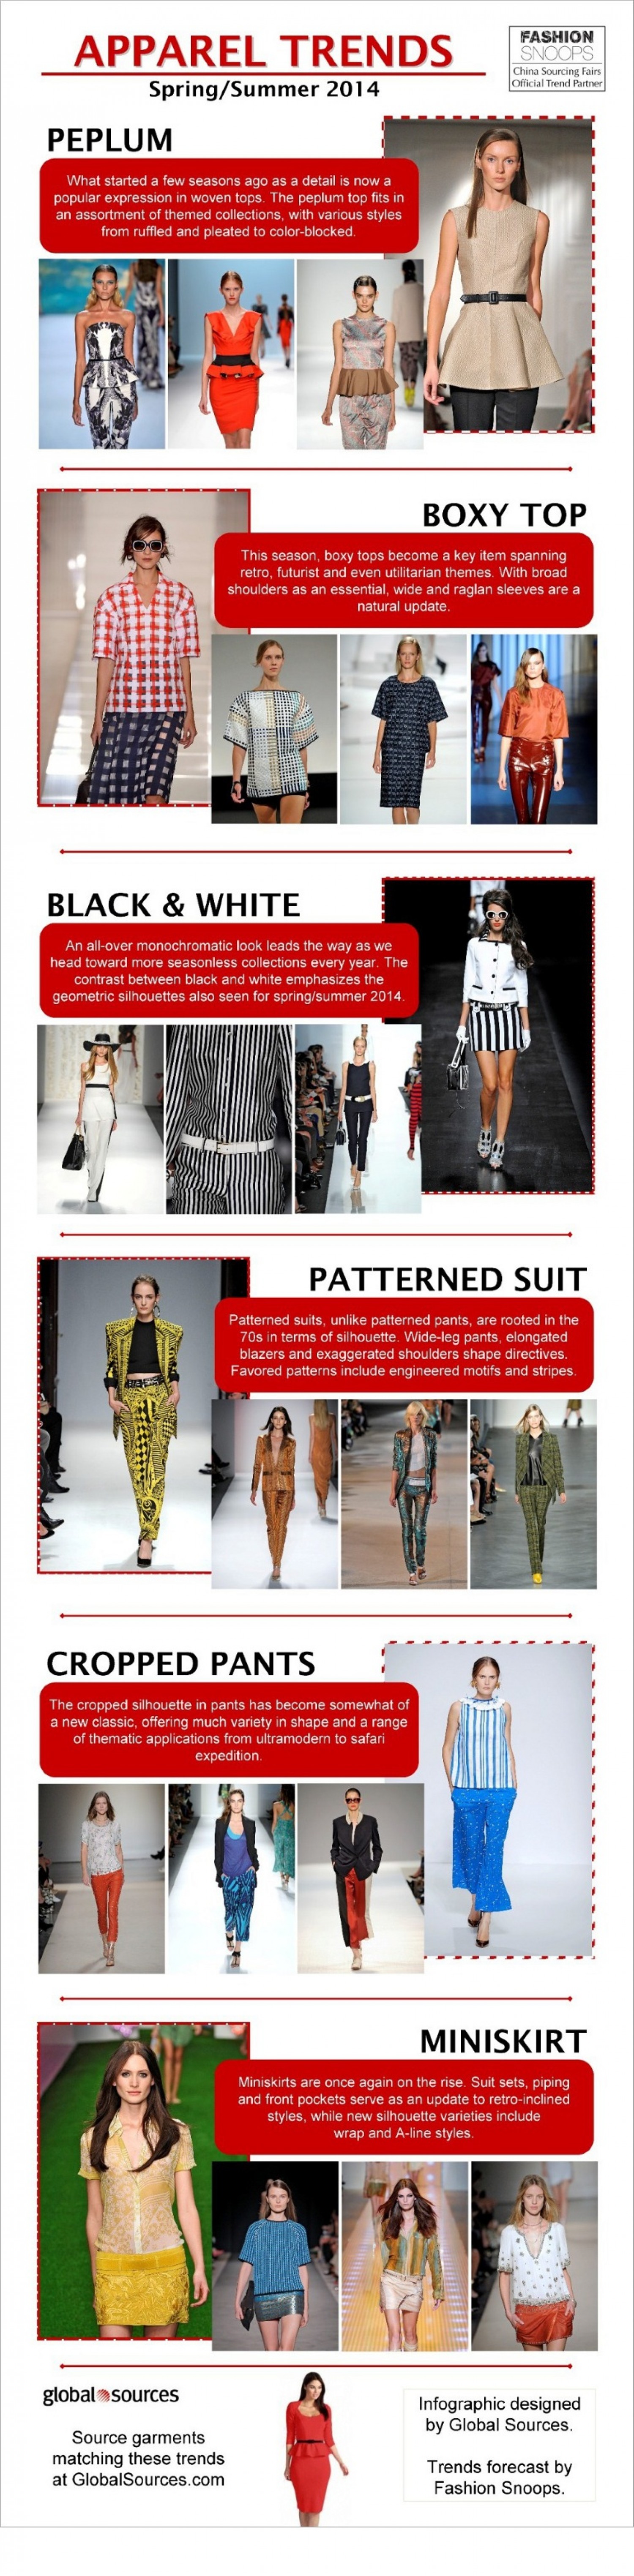 06 apparel-trends-for-springsummer-2014-infographic_529706854b062_w1500